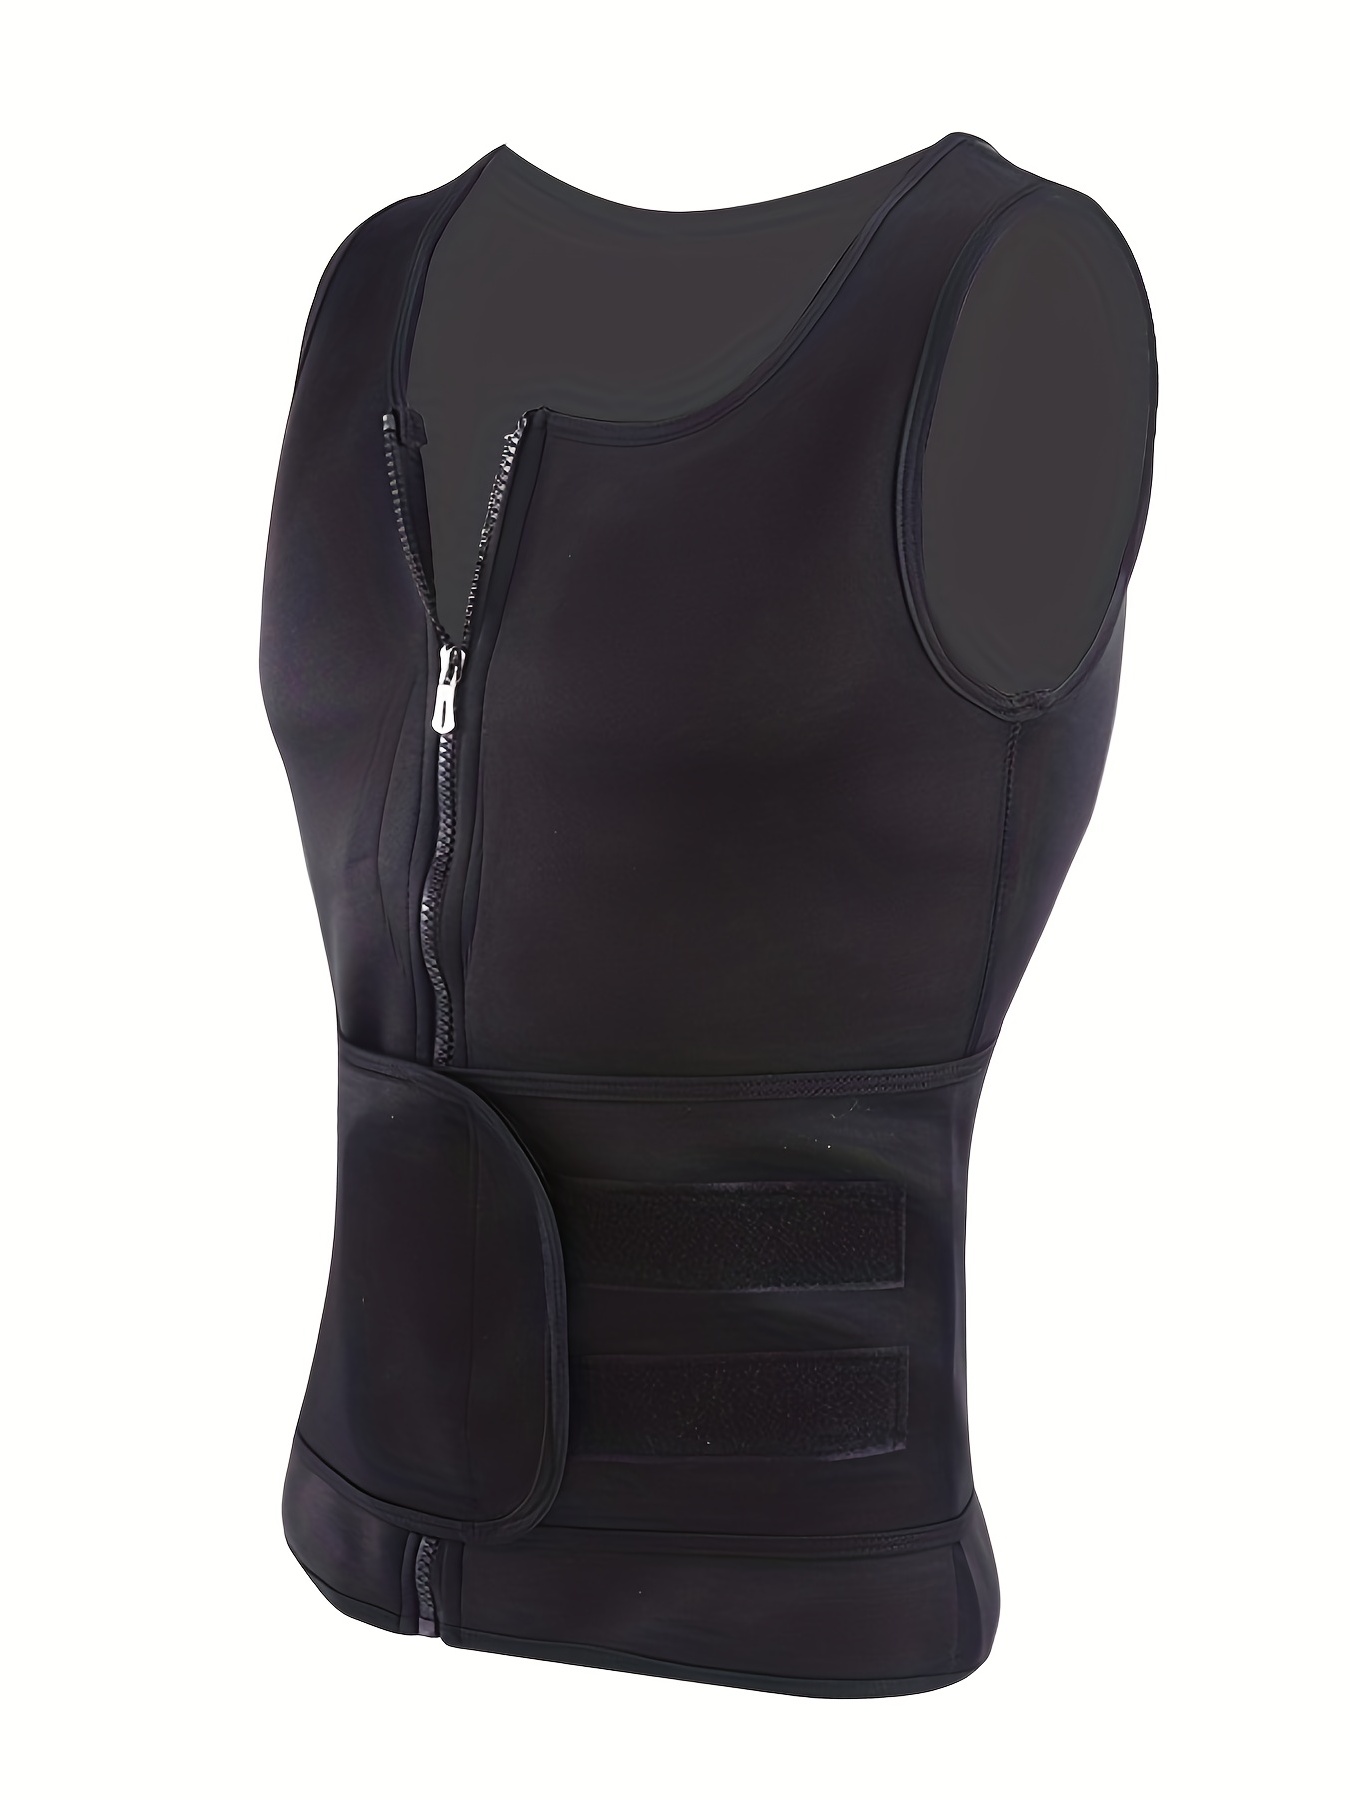 Sauna Suit For Men Waist Trainer Tummy Control Vest Zipper Body Shaper With  Adjustable Tank Top For Fitness